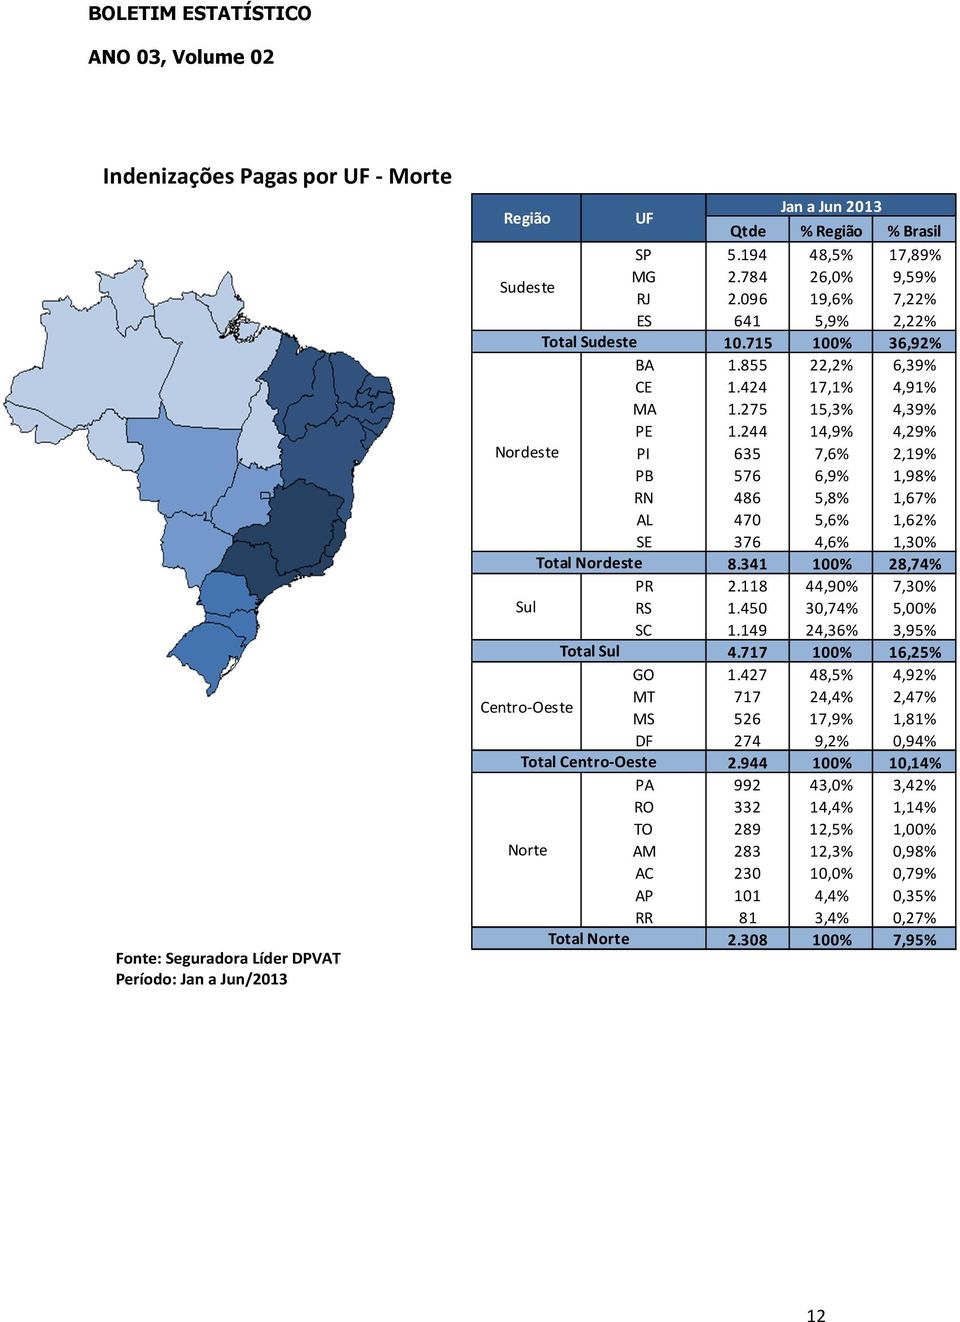 244 14,9% 4,29% Nordeste PI 635 7,6% 2,19% PB 576 6,9% 1,98% RN 486 5,8% 1,67% AL 470 5,6% 1,62% SE 376 4,6% 1,30% Total Nordeste 8.341 100% 28,74% PR 2.118 44,90% 7,30% Sul RS 1.